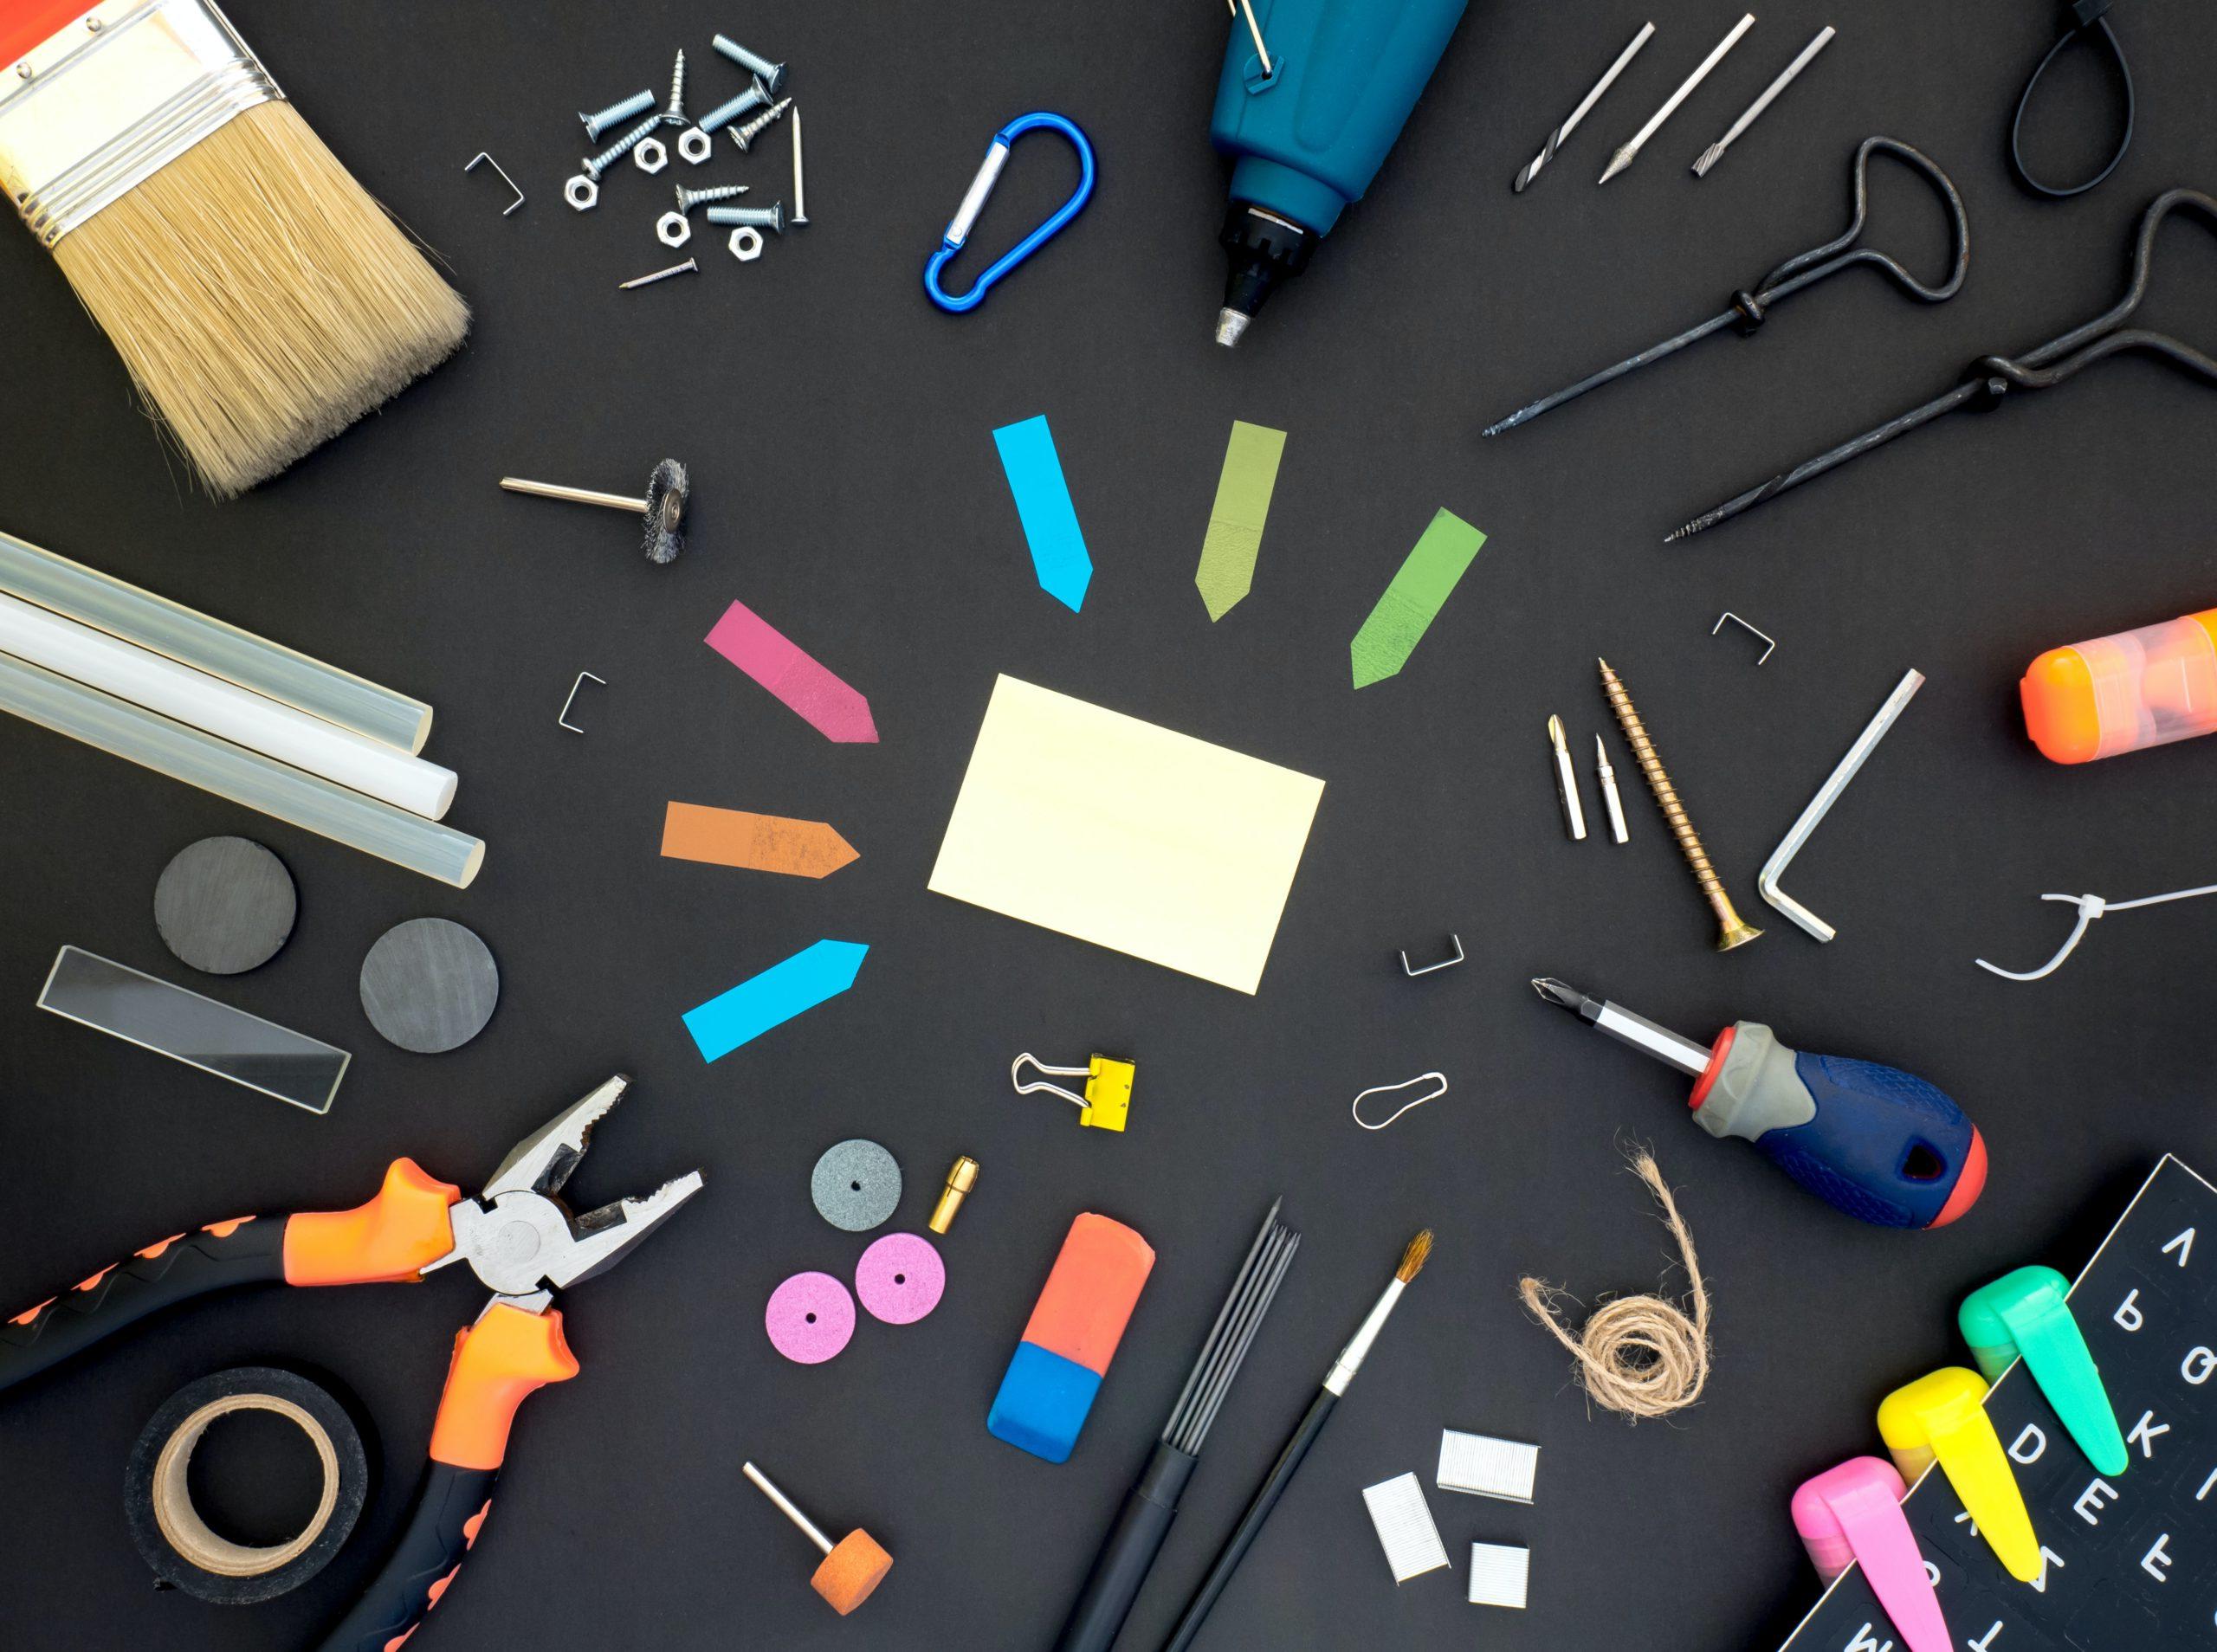 各种各样的工具放在黑色的表面上，包括便利贴, screwdrivers, wrenches, tape, paintbrushes, highlighters, glue sticks, staples, magnets, and paperclips.